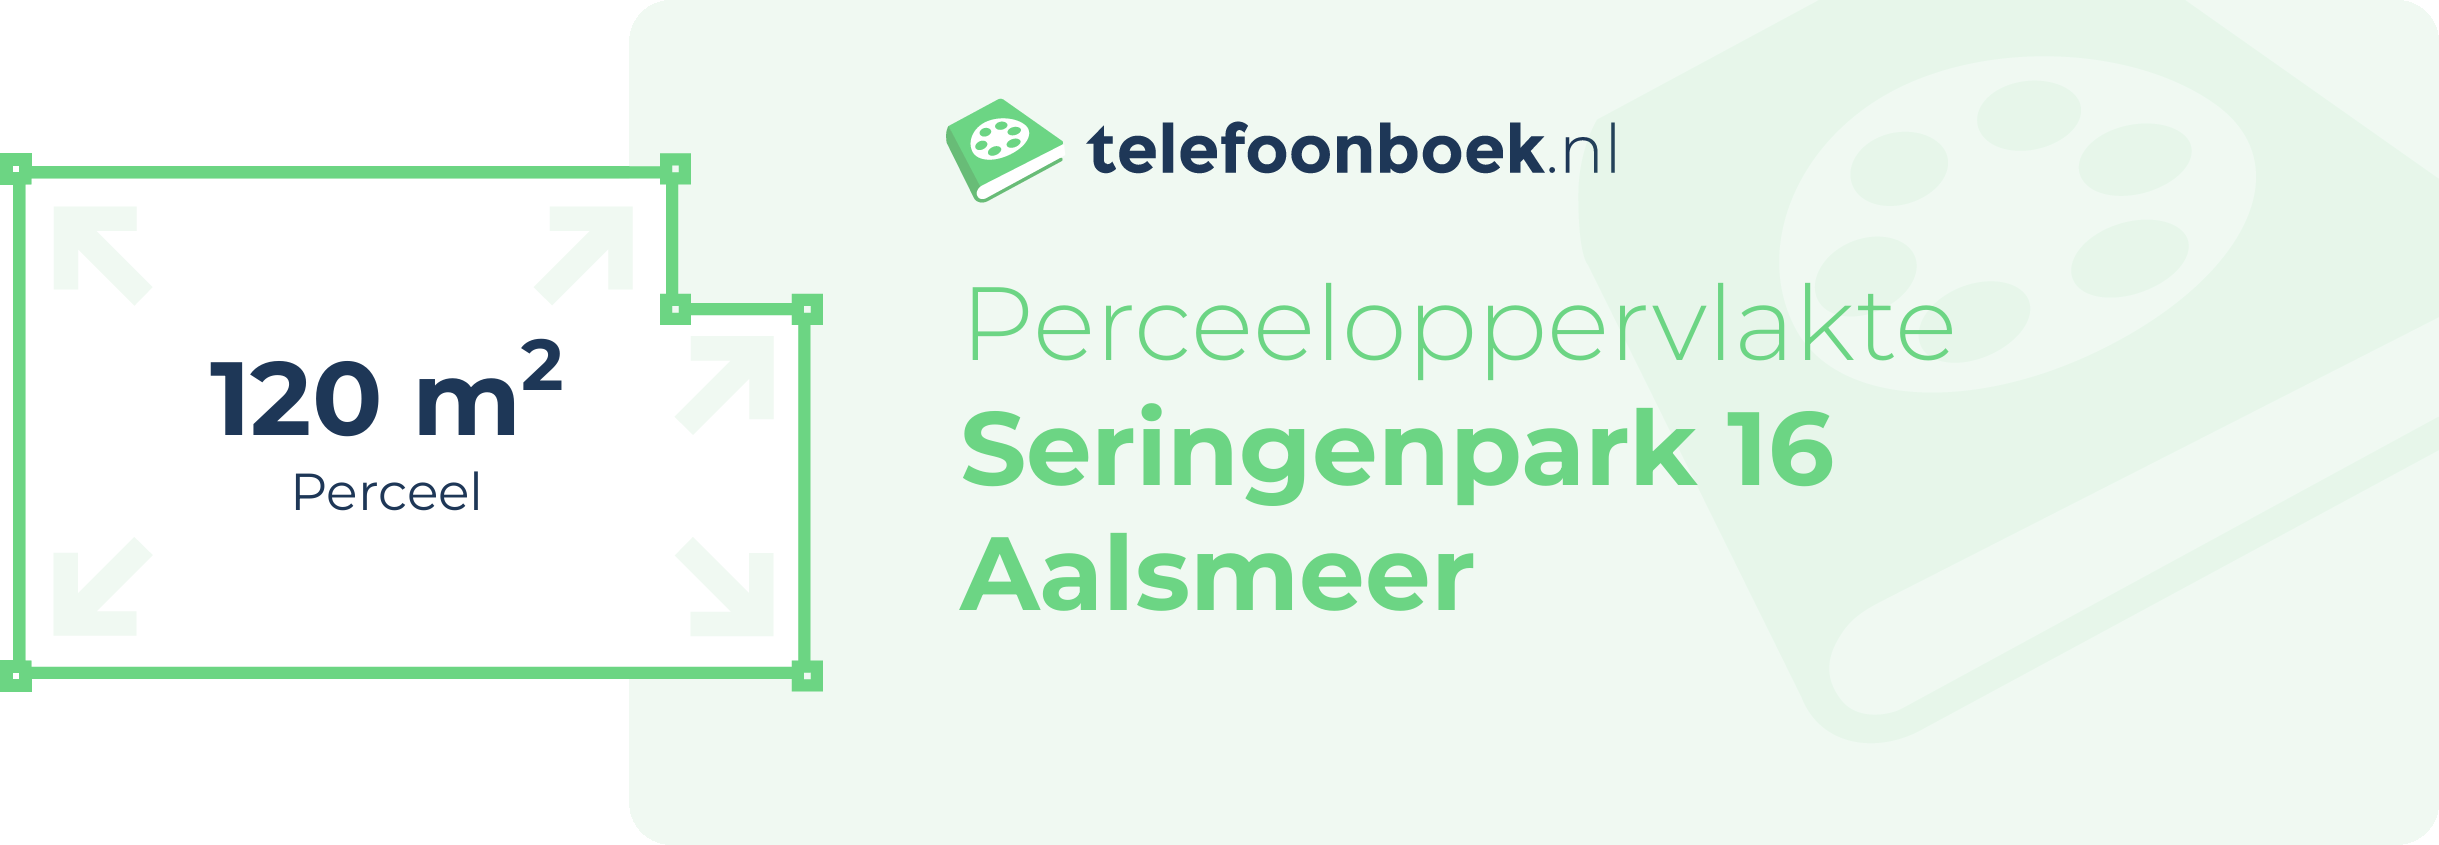 Perceeloppervlakte Seringenpark 16 Aalsmeer